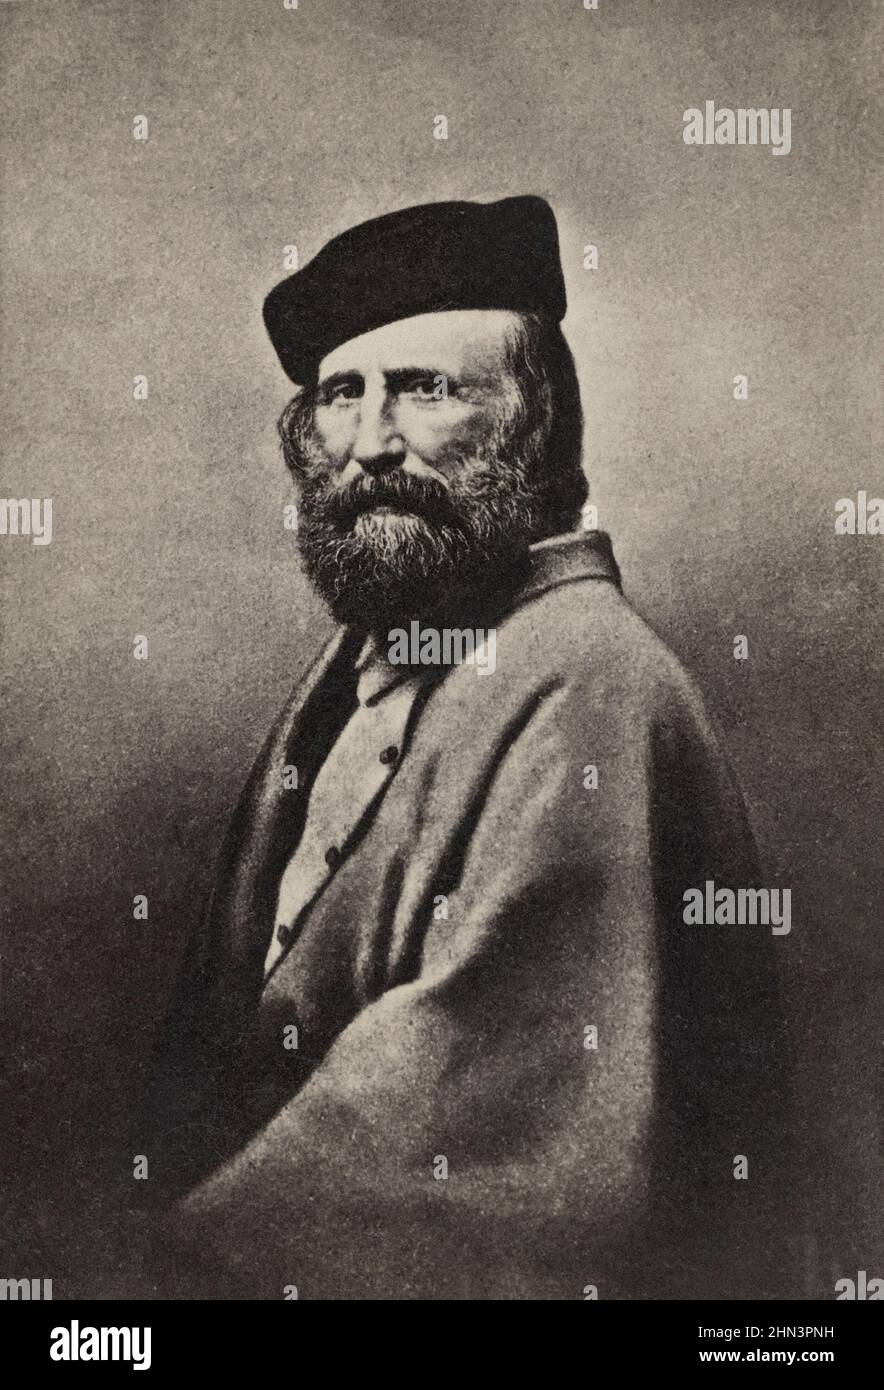 Retrato de Giuseppe Garibaldi. 1860s Giuseppe Maria Garibaldi (1807 – 1882) fue un general, patriota y republicano italiano. Contribuyó al ATI Foto de stock